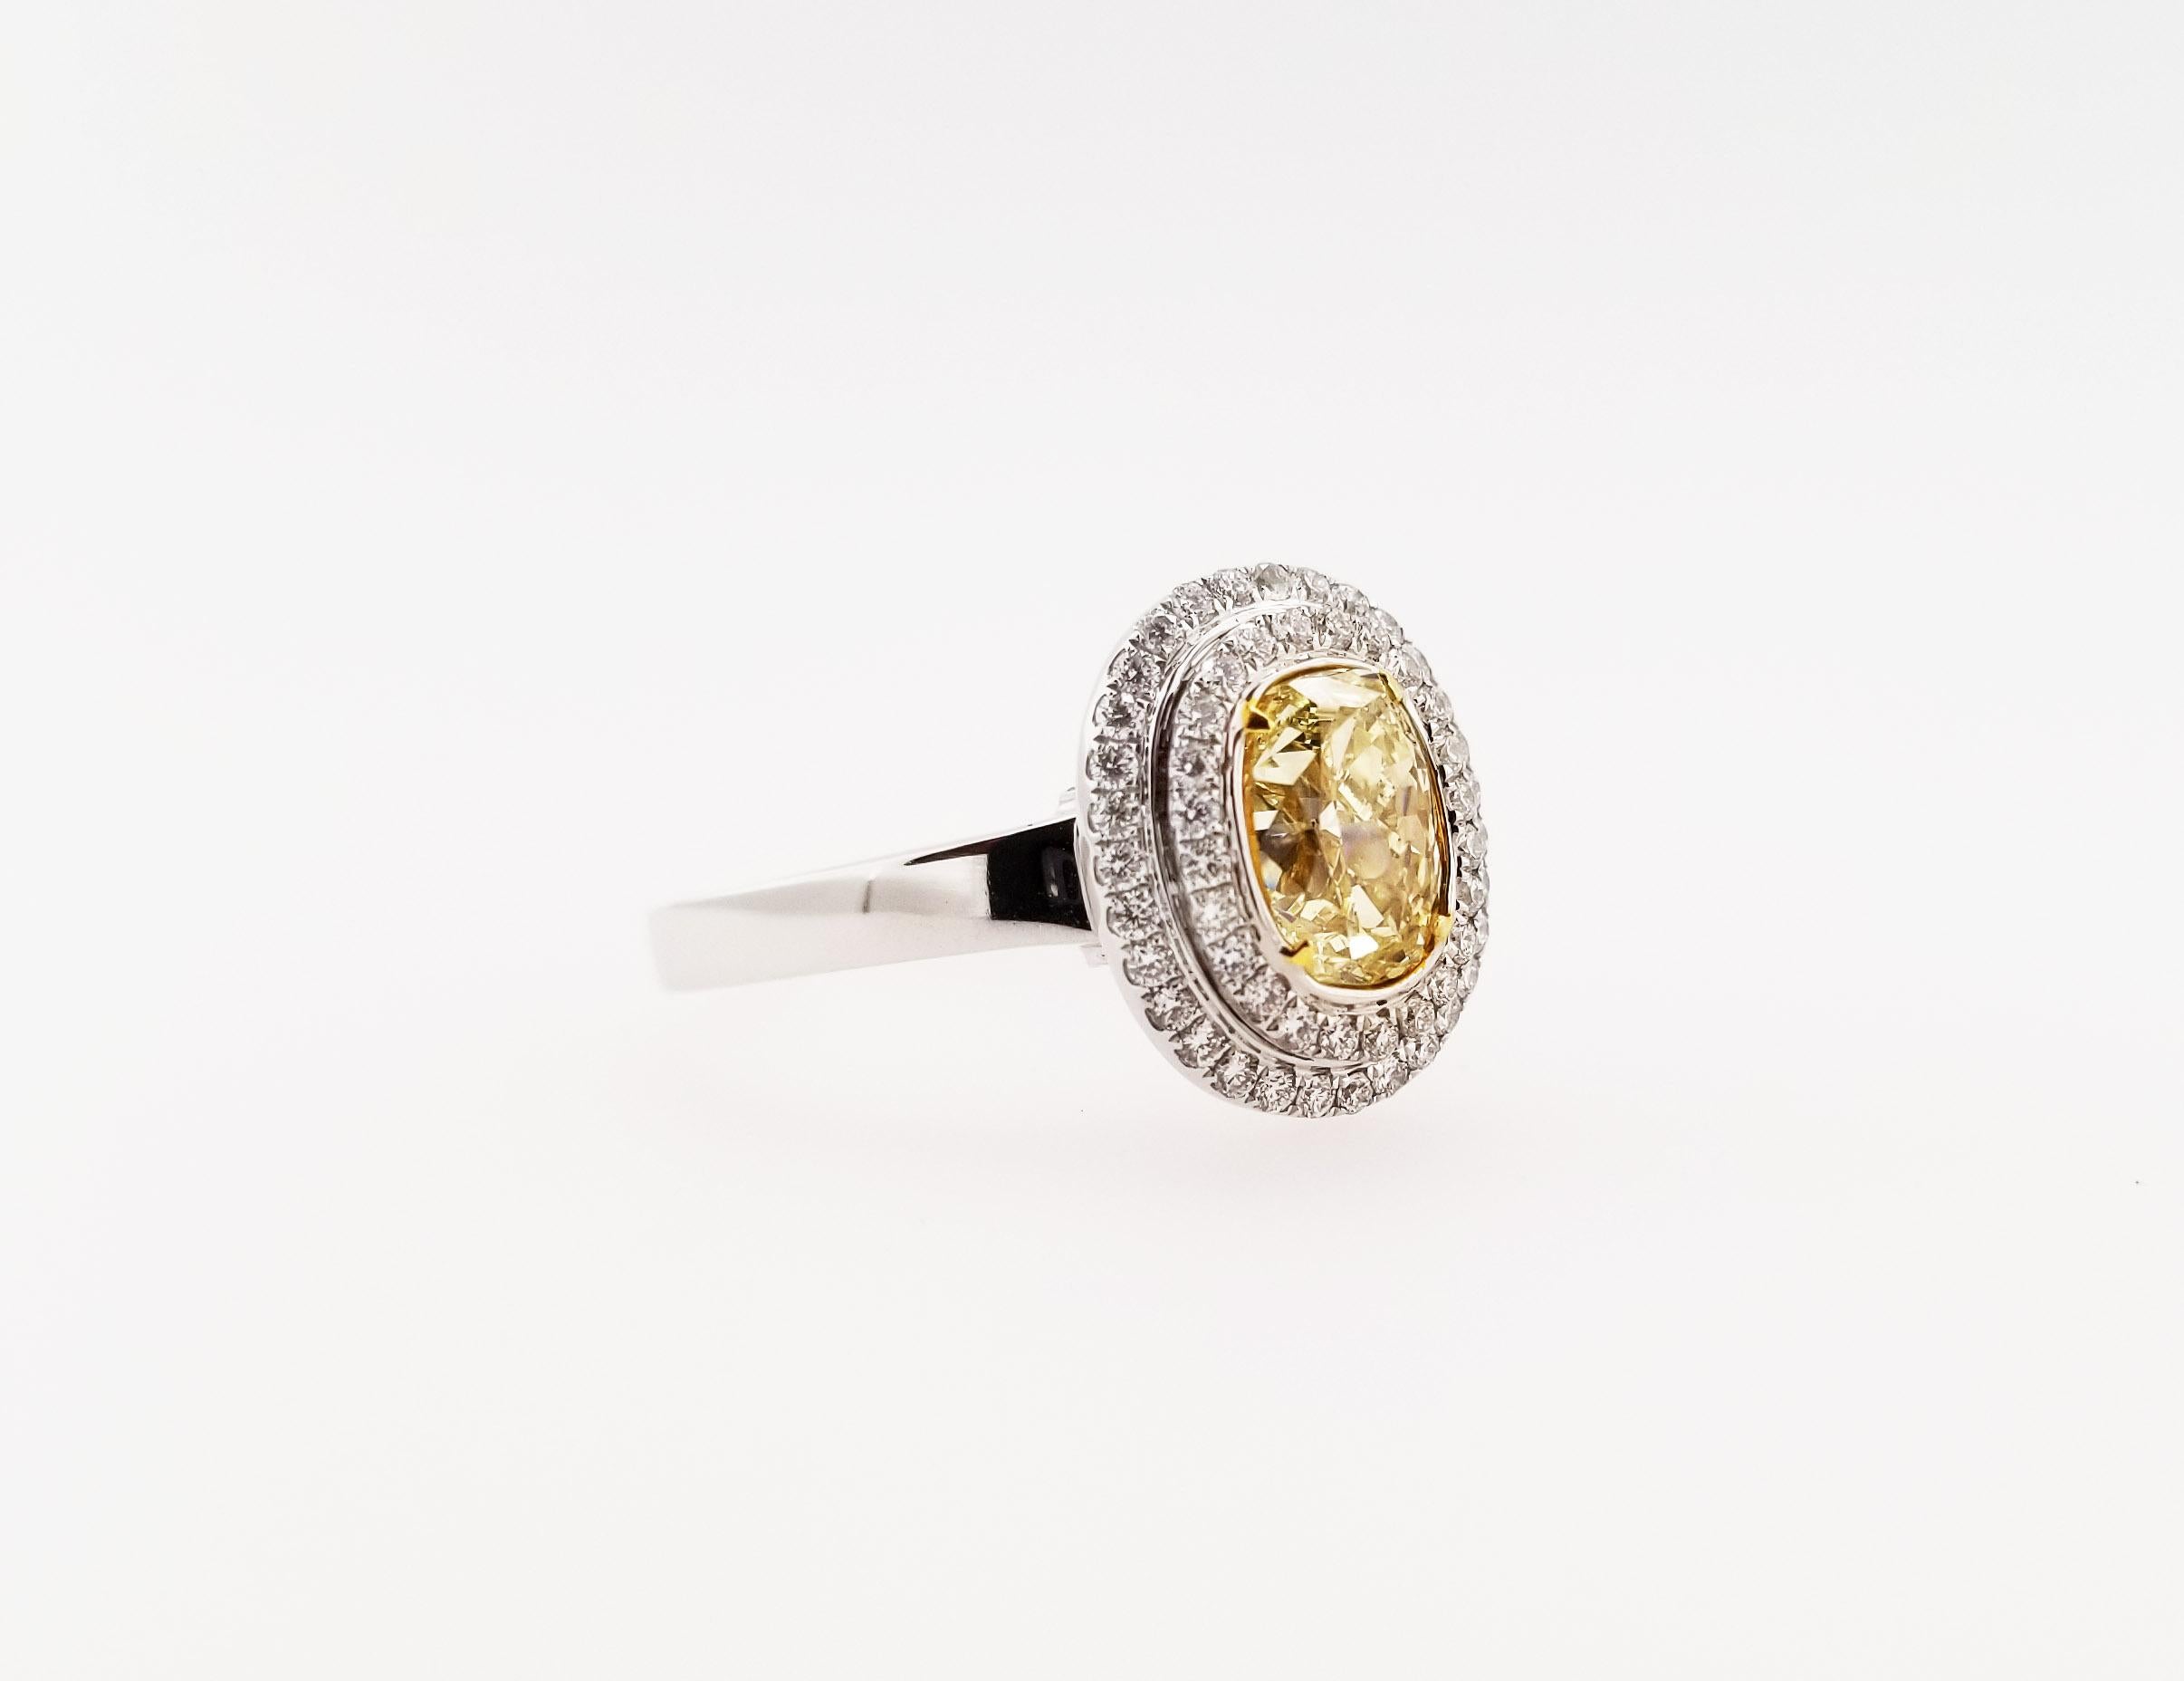 Contemporain Gift for Mother's Day : Scarselli, diamant jaune clair fantaisie de 1,20 carat certifié GIA en vente